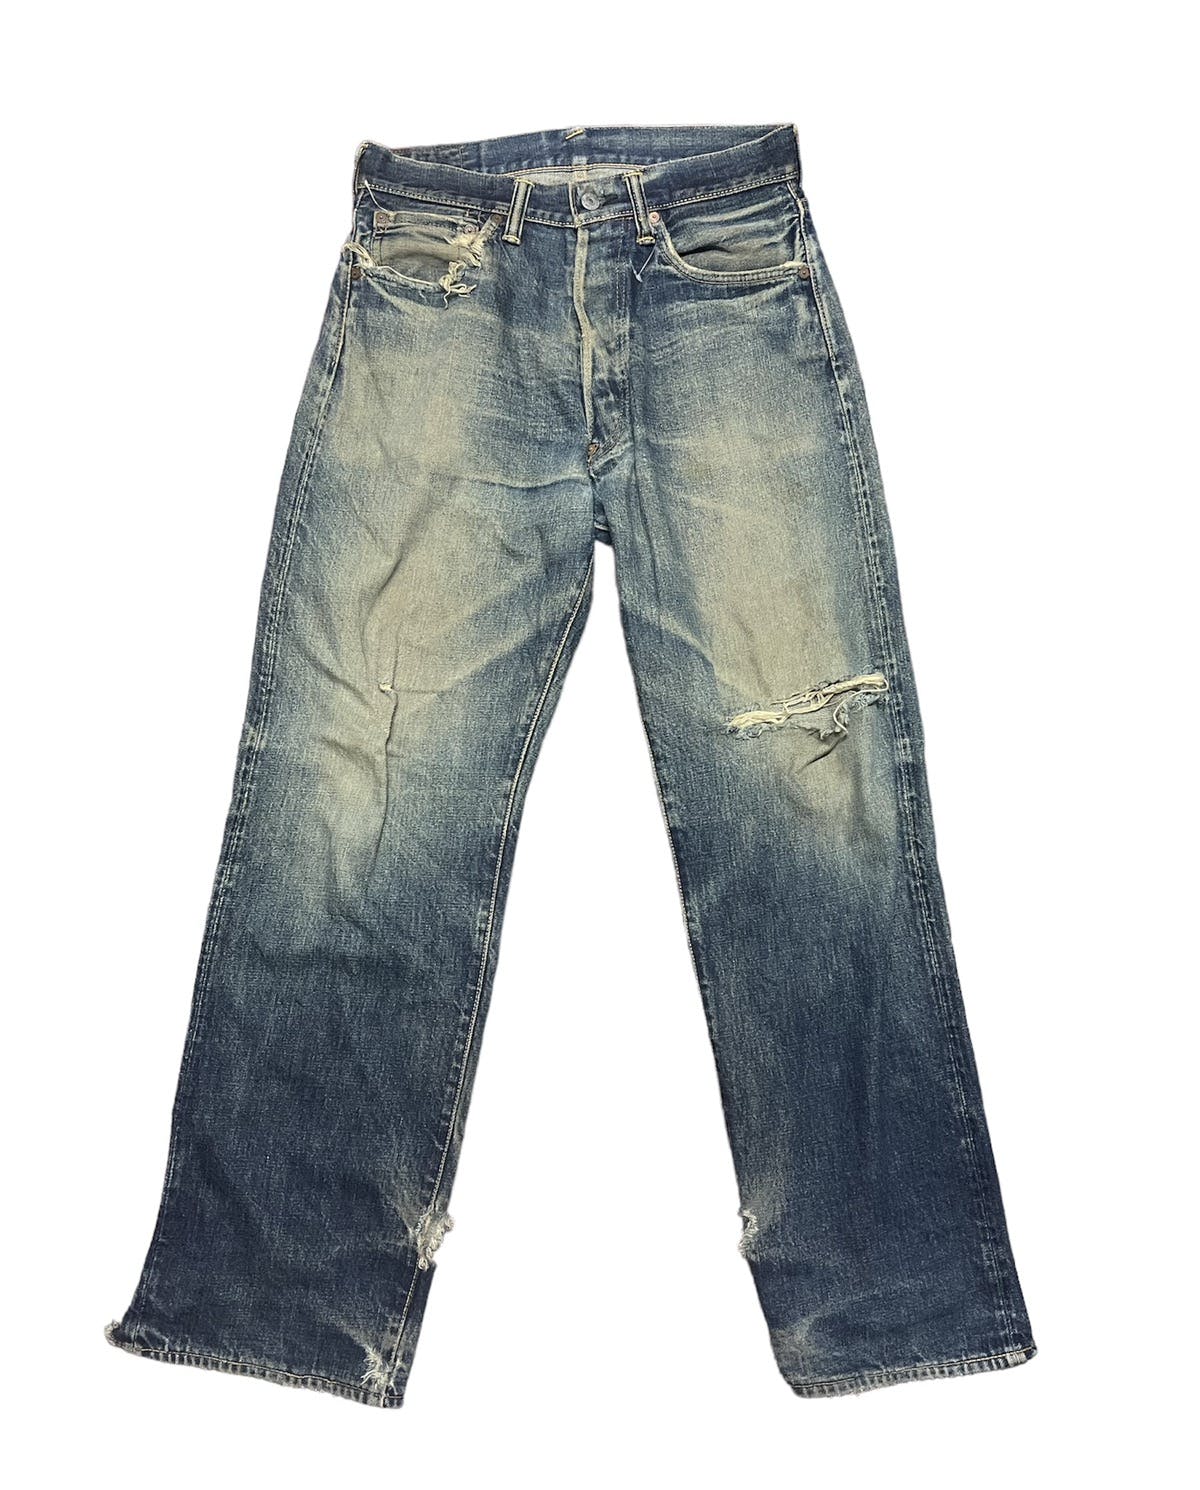 Evisu Denim distressed selvedge jeans - 1